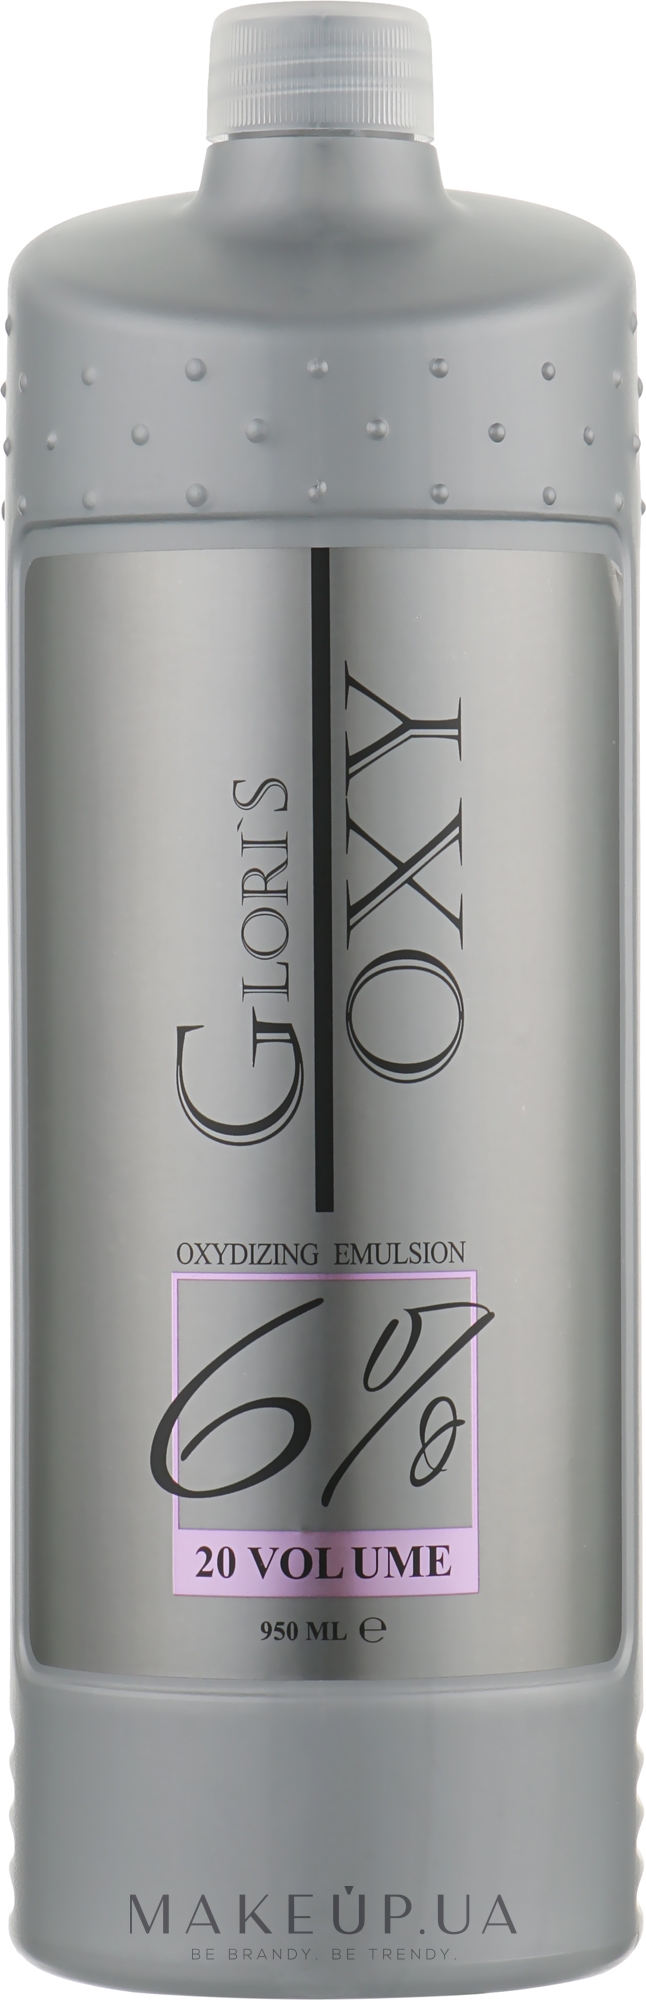 Окислительная эмульсия 6 % - Glori's Oxy Oxidizing Emulsion 20 Volume 6 % — фото 950ml